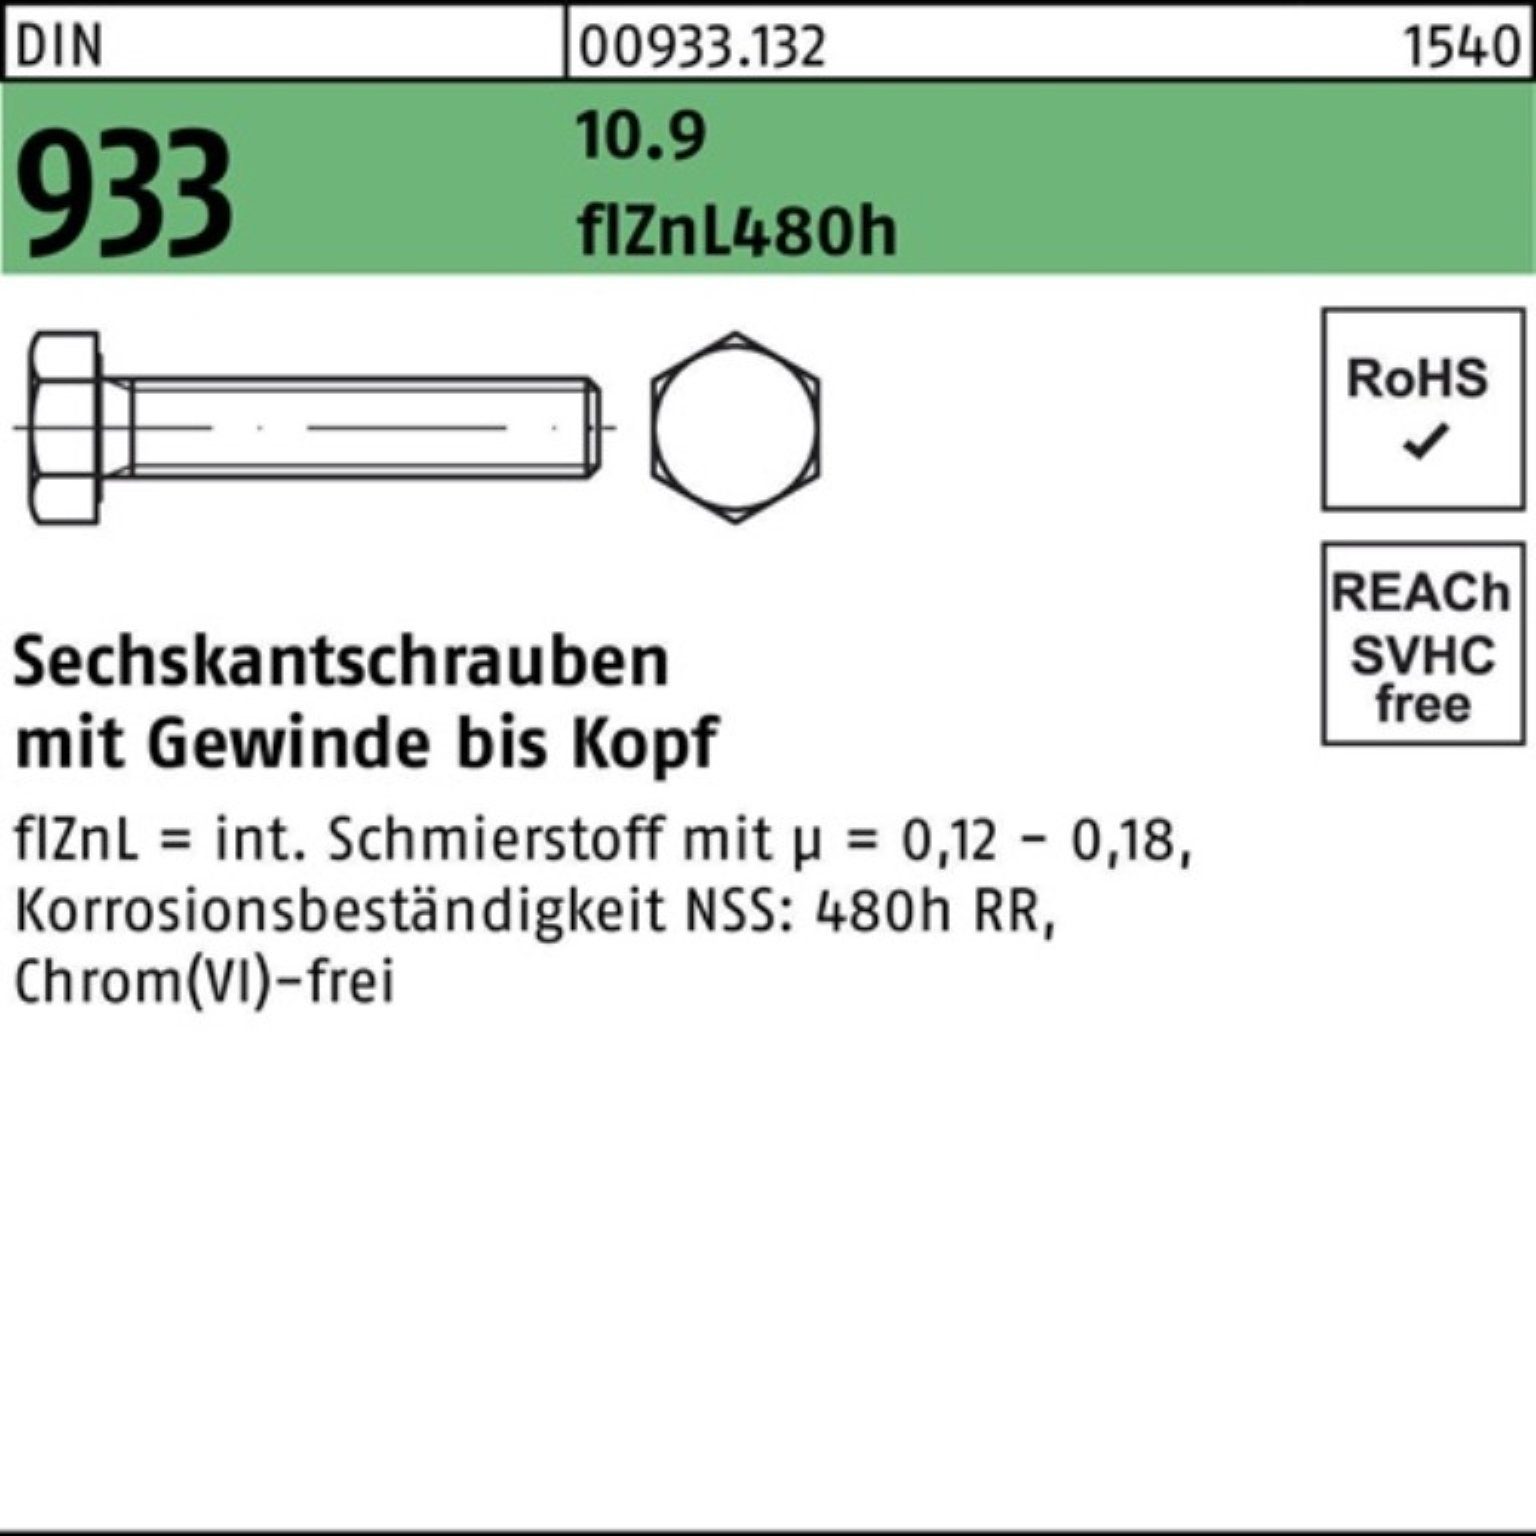 Reyher Sechskantschraube 500er Pack Sechskantschraube DIN 933 VG M6x 30 10.9 flZnL/nc/x/x/480h